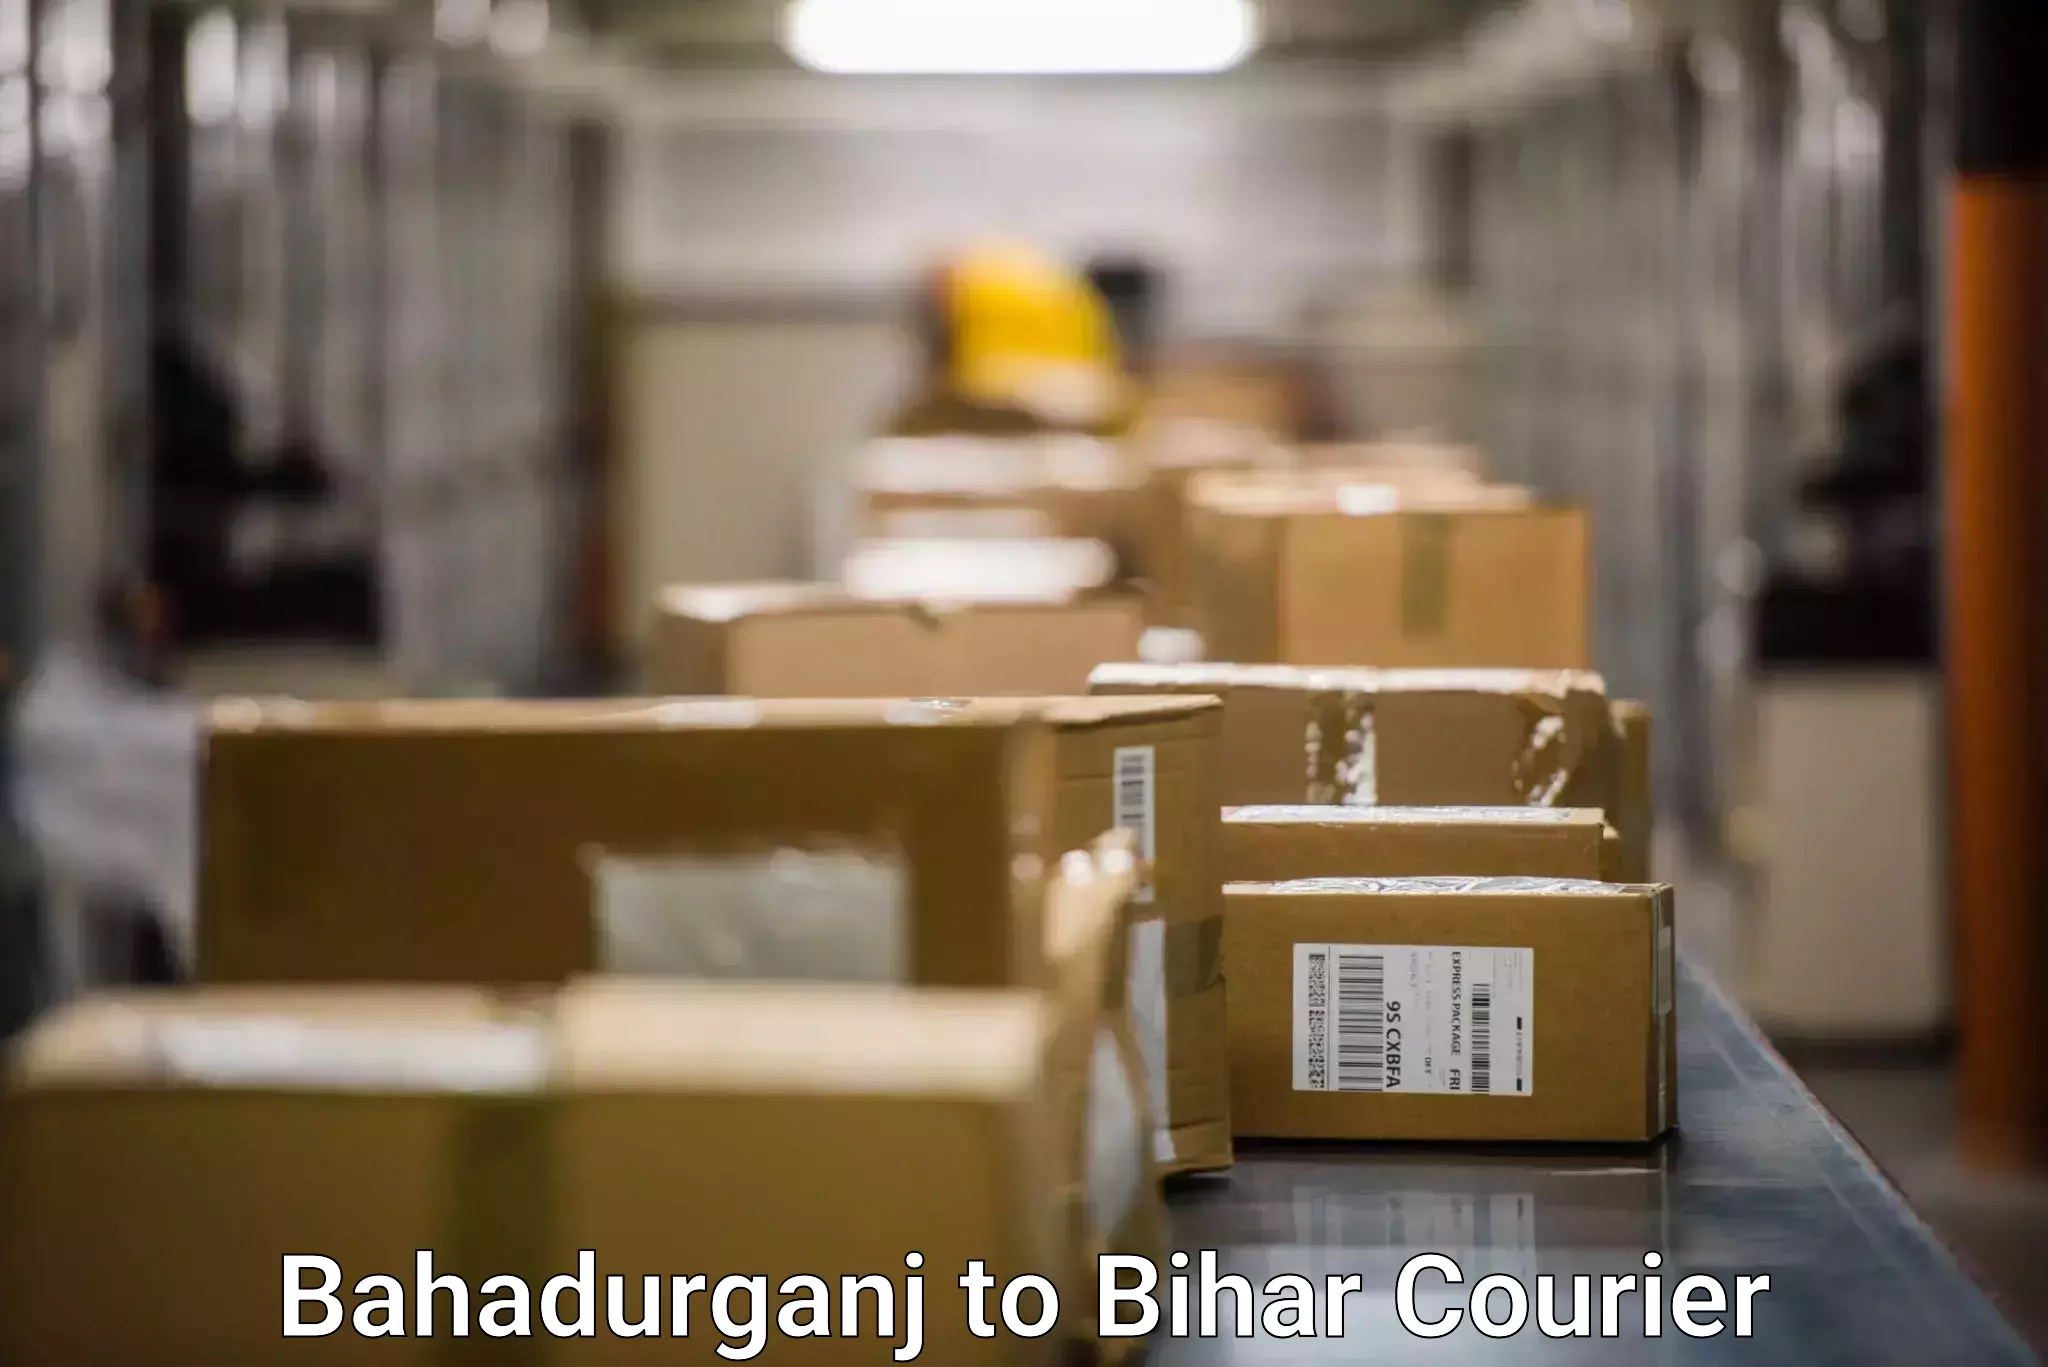 On-demand shipping options Bahadurganj to Kamtaul